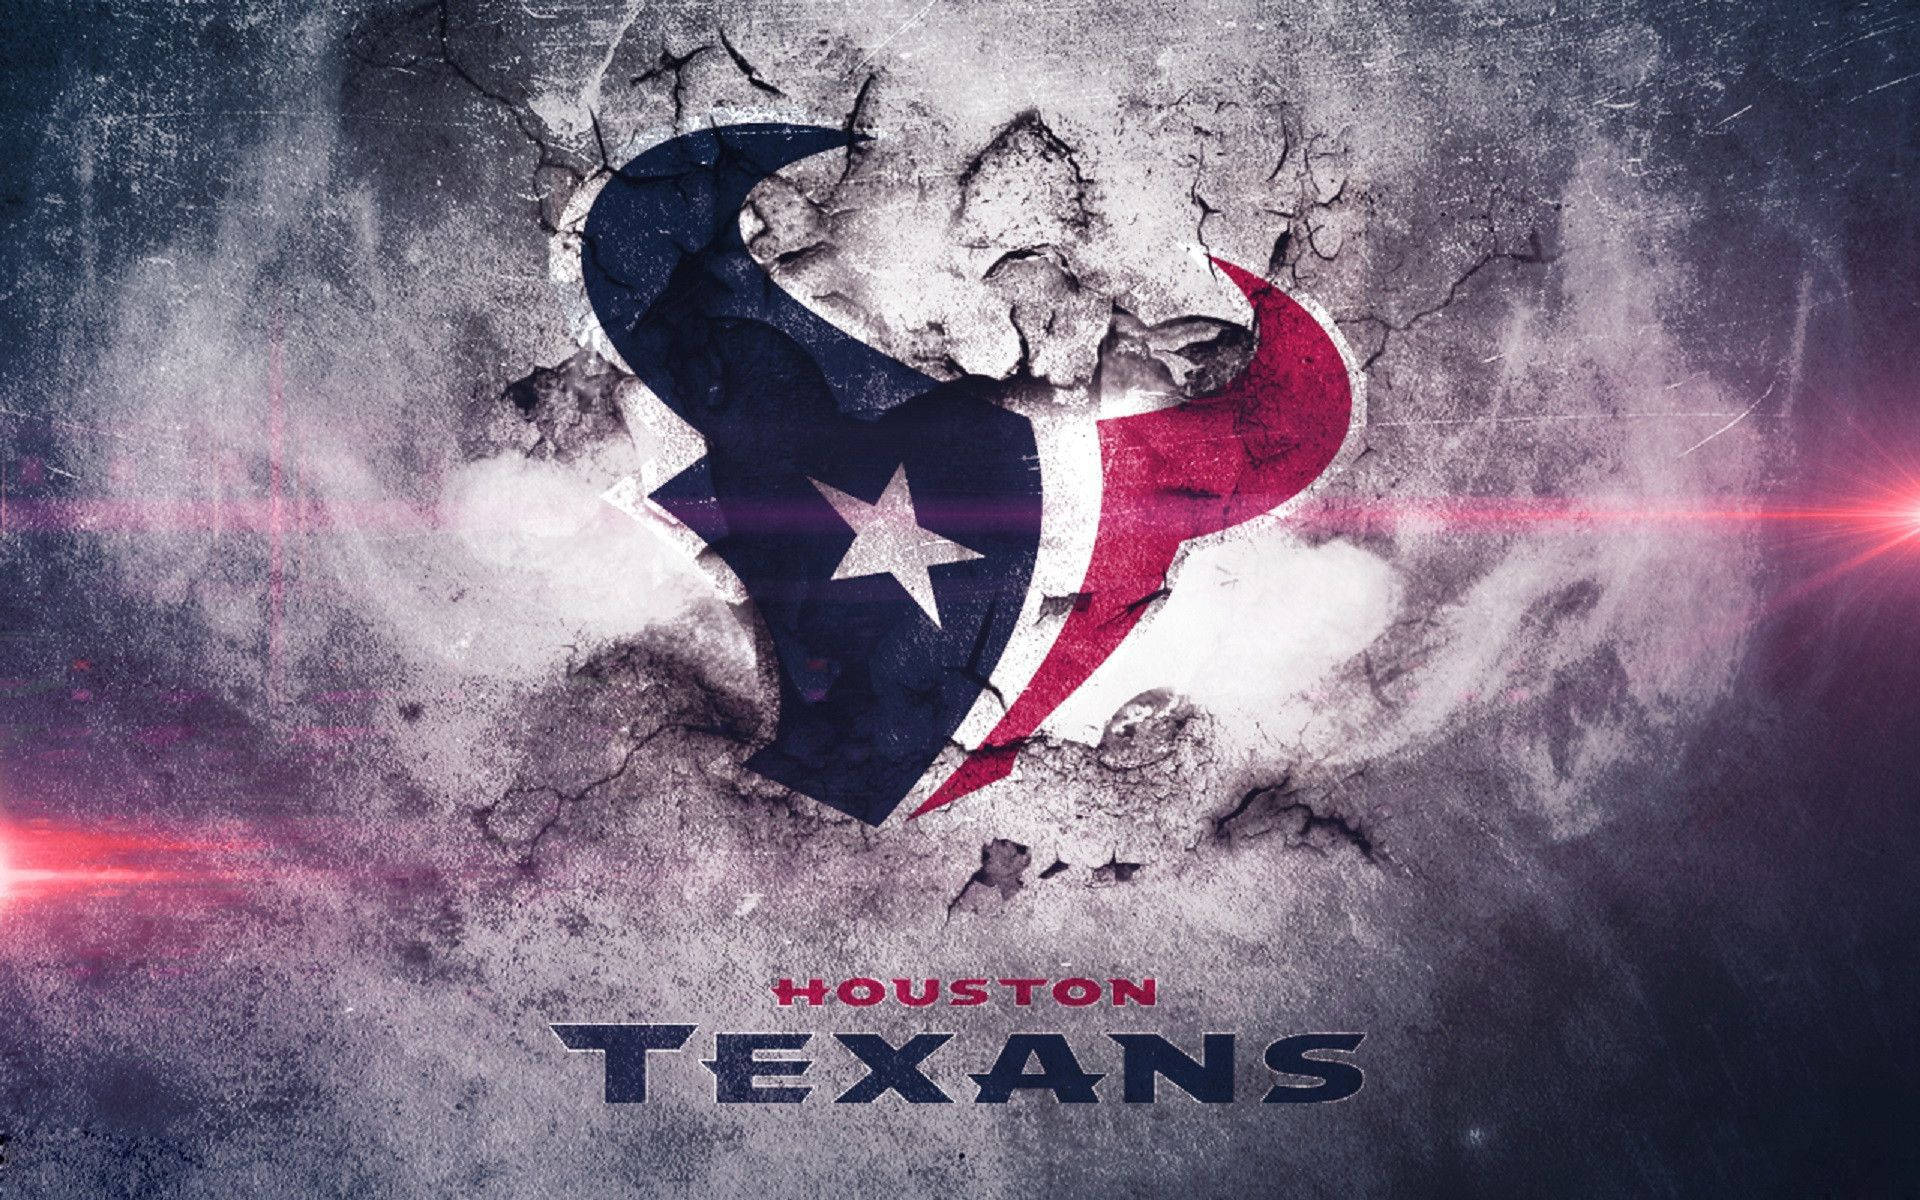 Houston Texans HD Wallpapers  2023 NFL Football Wallpapers  Houston texans  Houston texans logo Texans